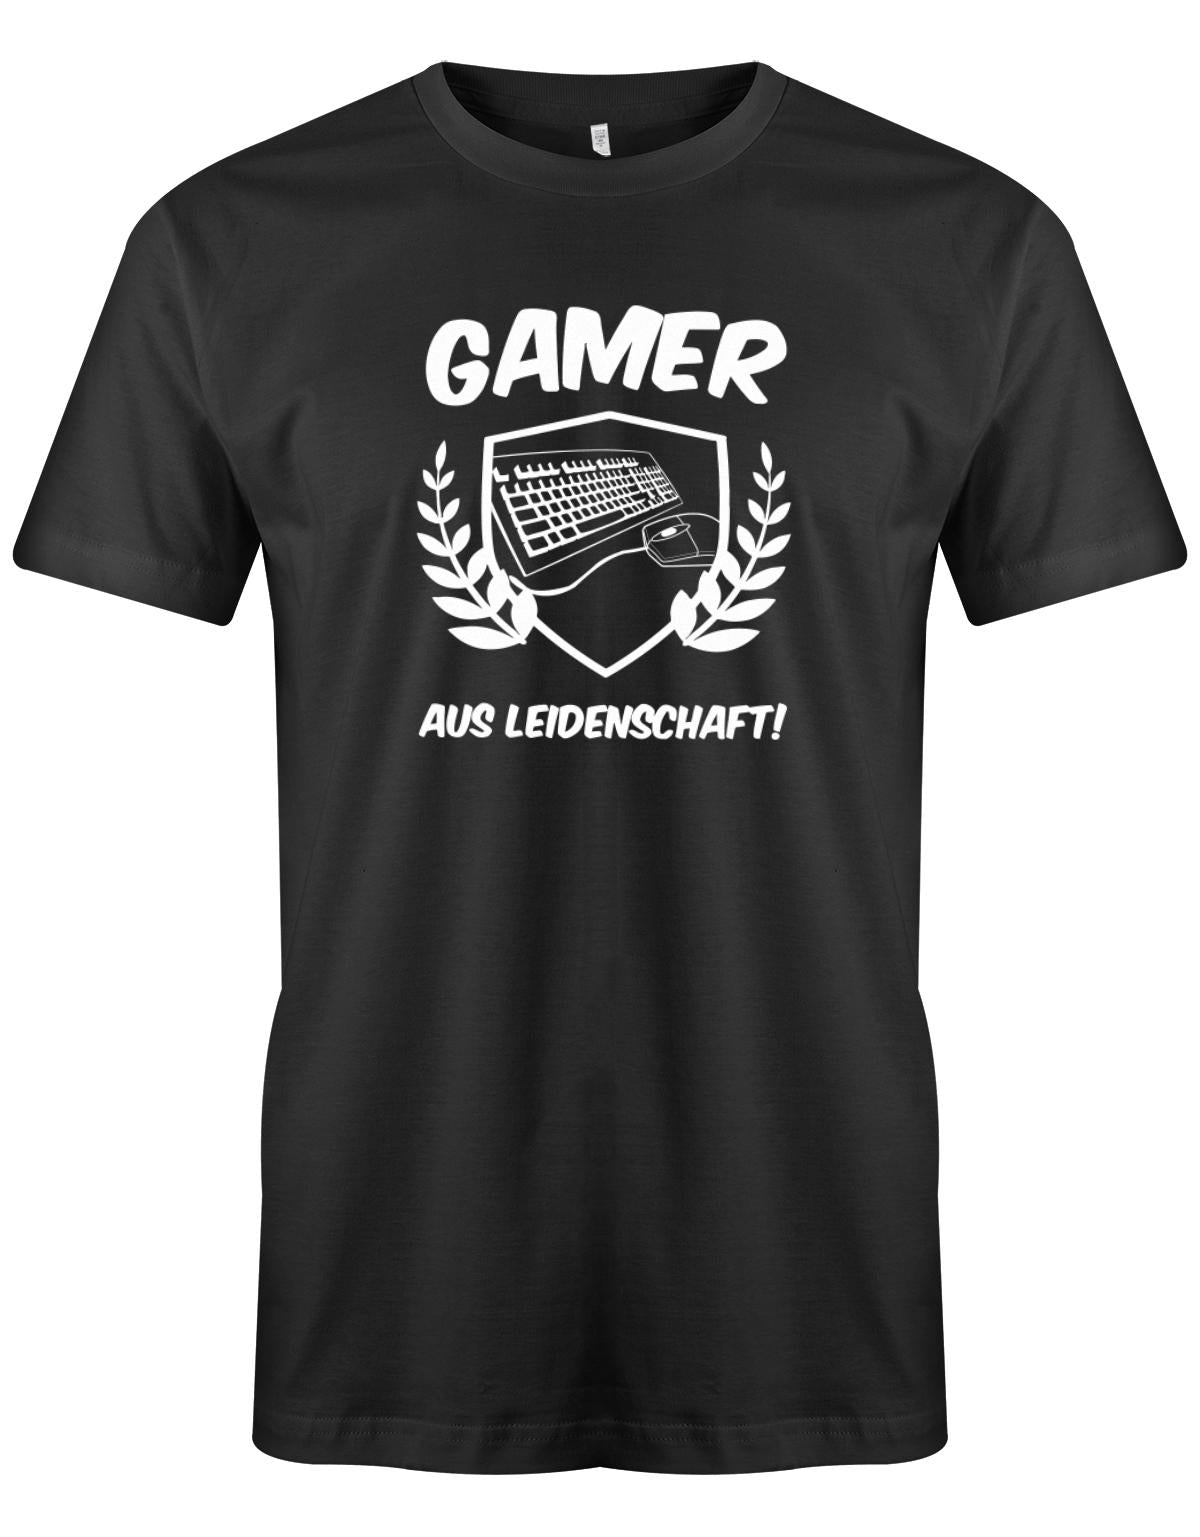 Gamer-Aus-leidenschaft-Herren-Gamer-Shirt-Schwarz